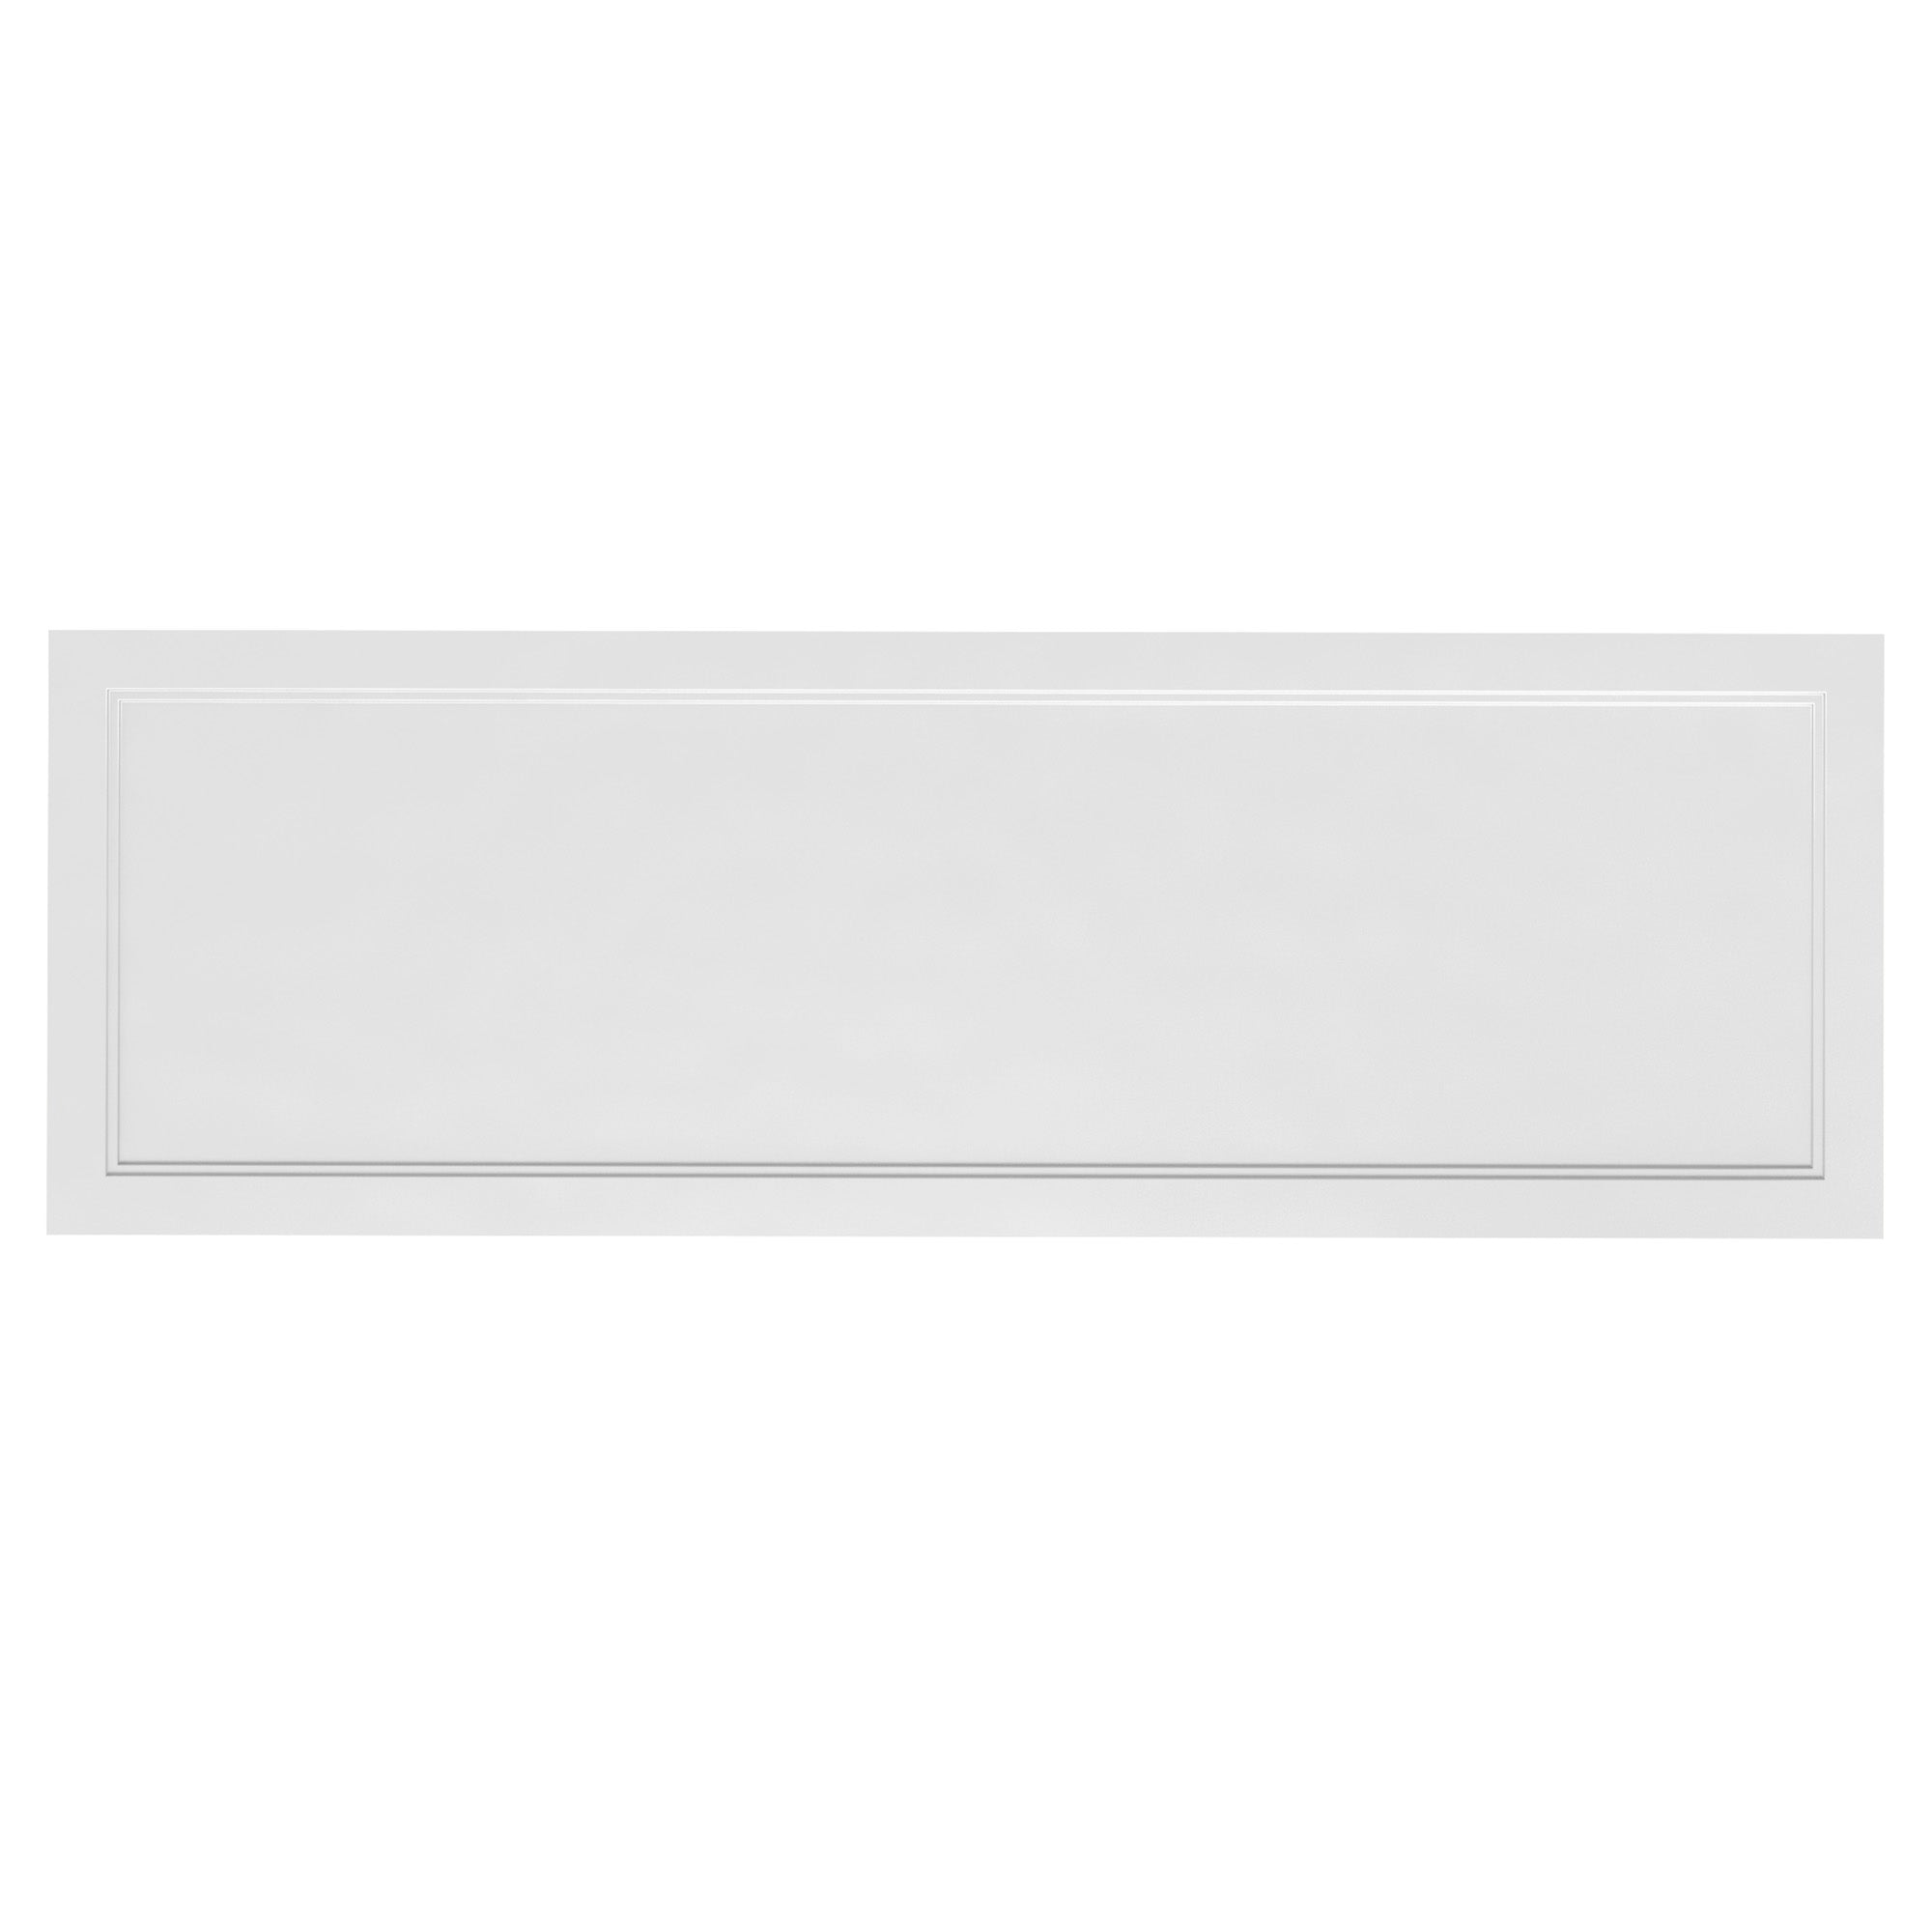 burlington arundel 1700 front bath panel matt white